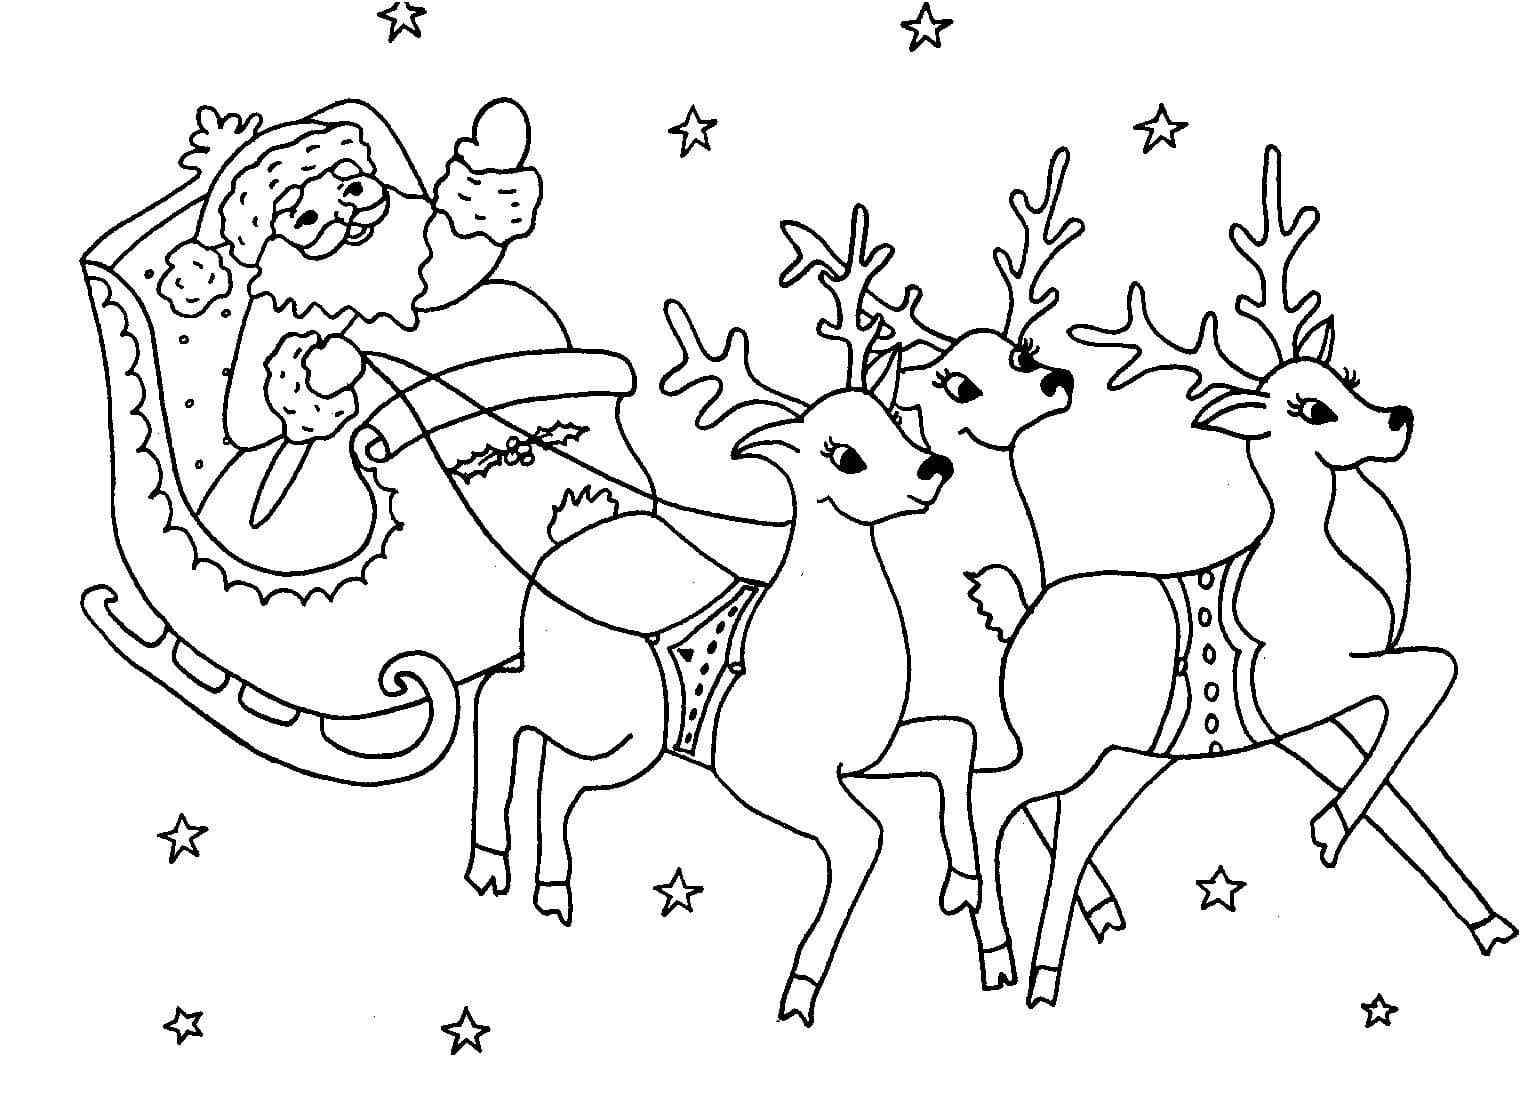 Reindeer Are Carrying Santa